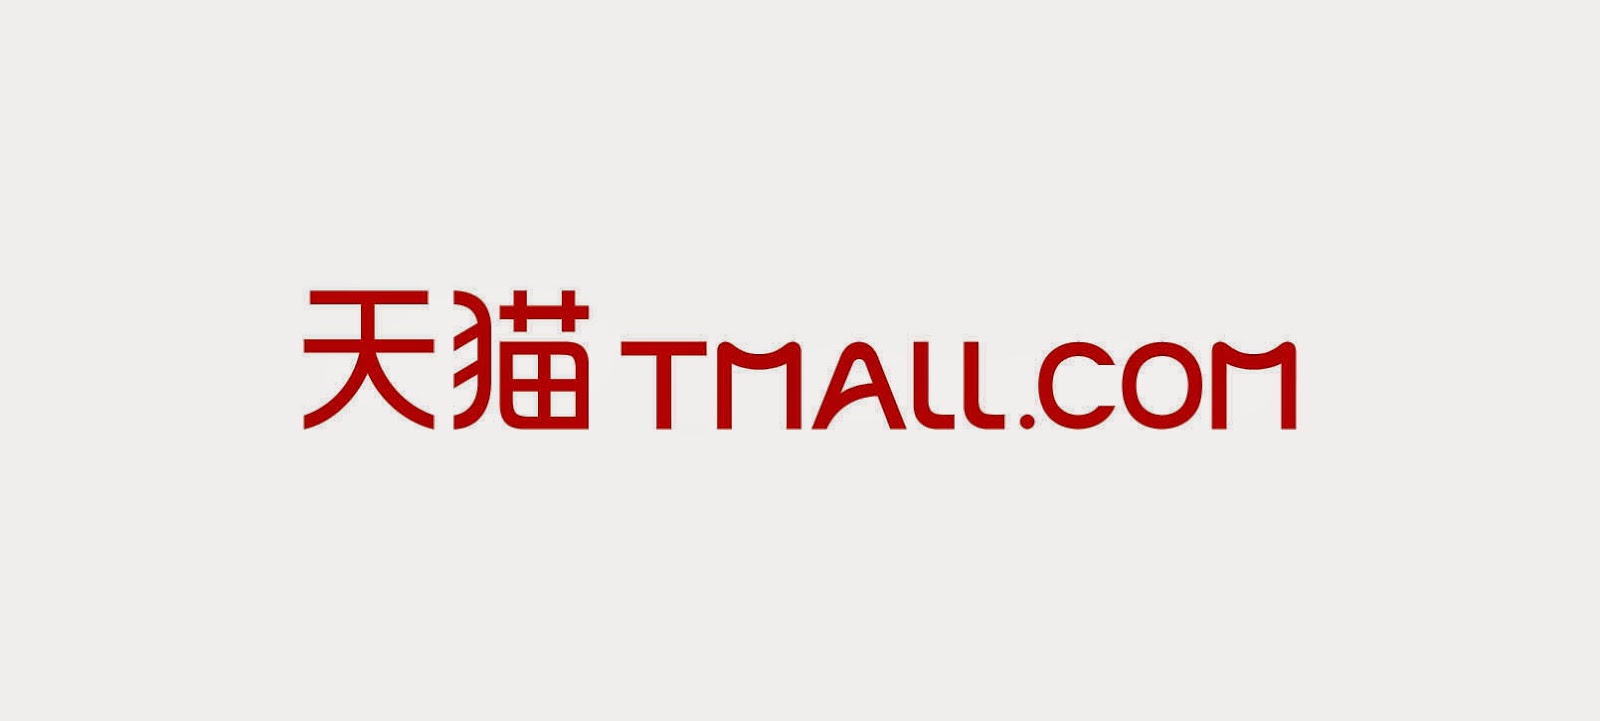 Tmall logo